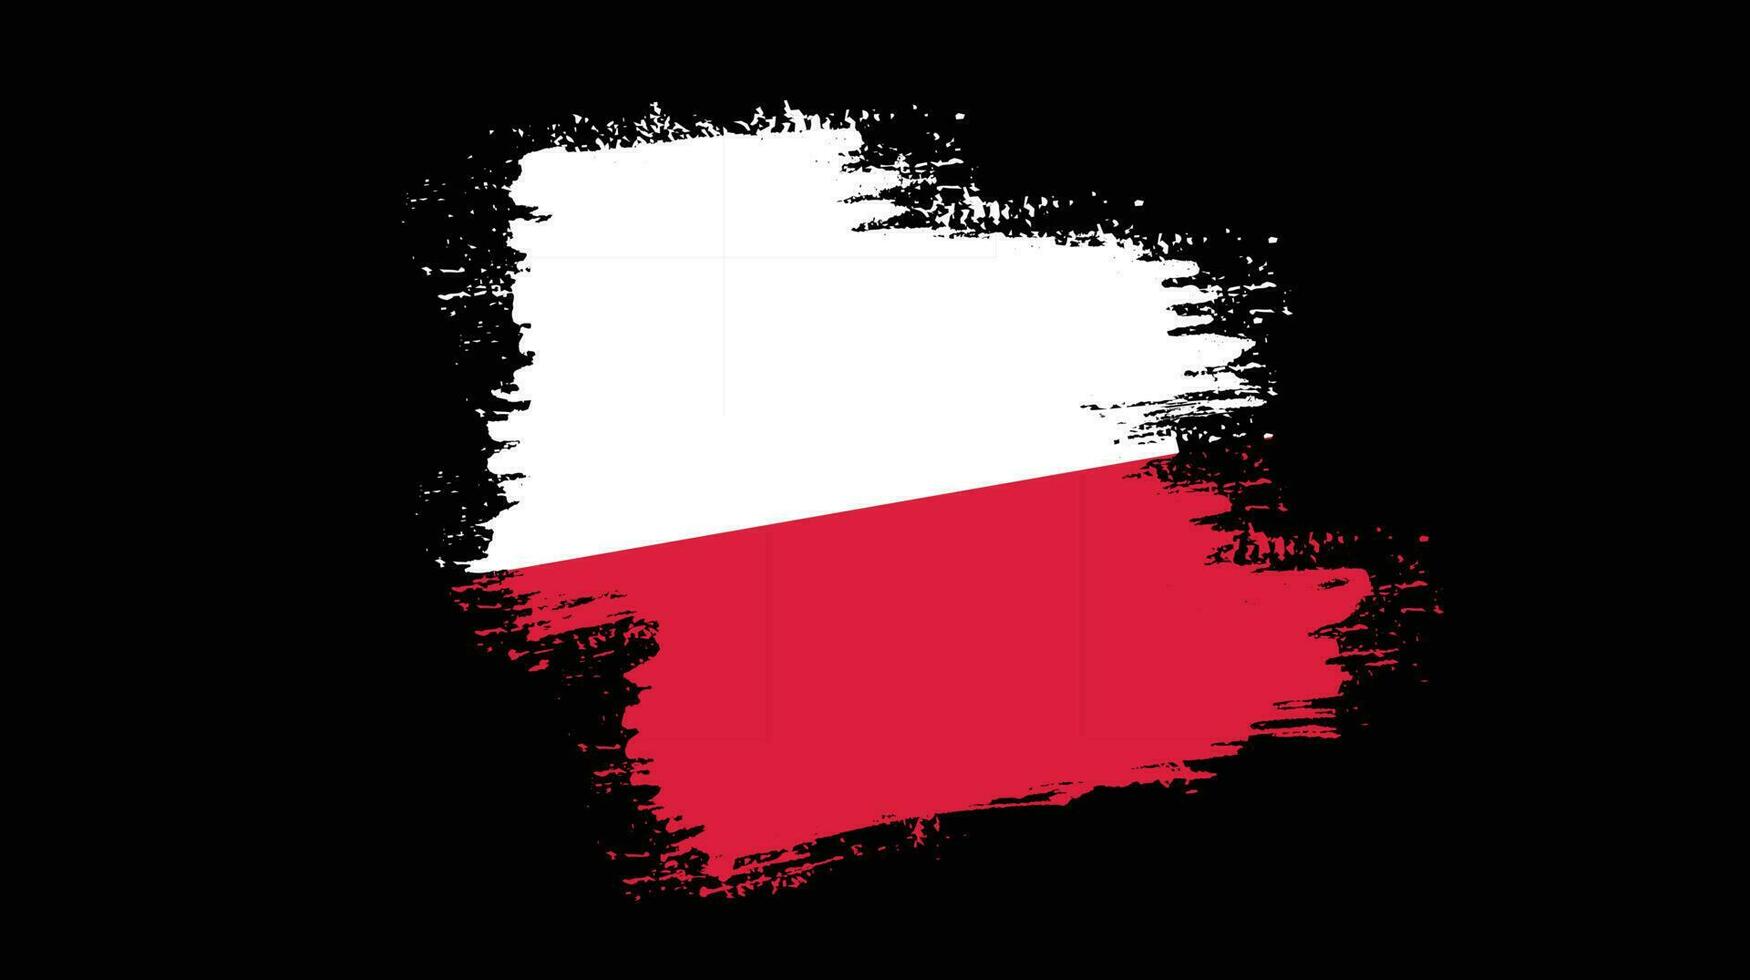 Poland grungy flag vector